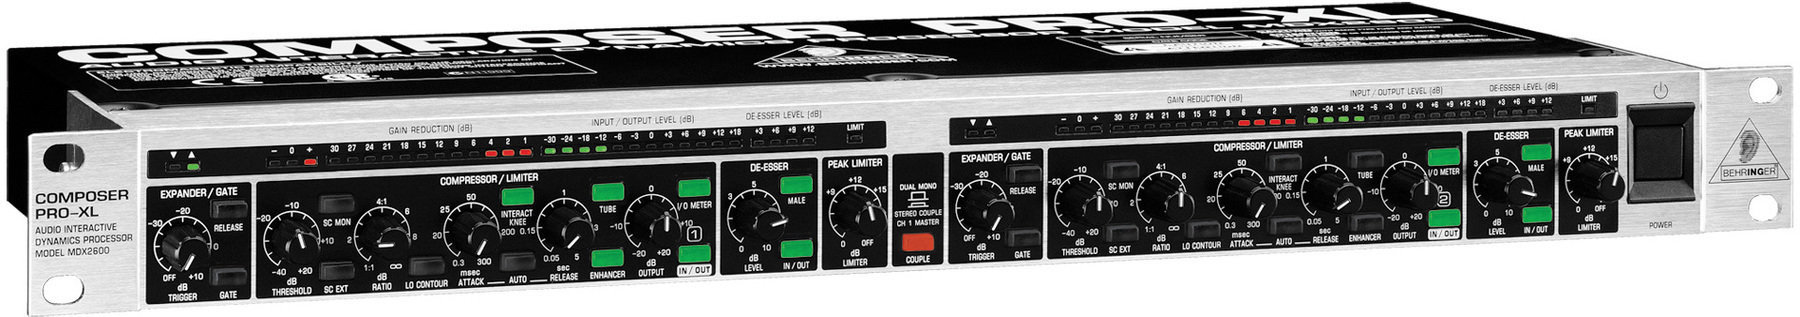 Processore Dinamica Audio Behringer MDX 2600 COMPOSER PRO-XL